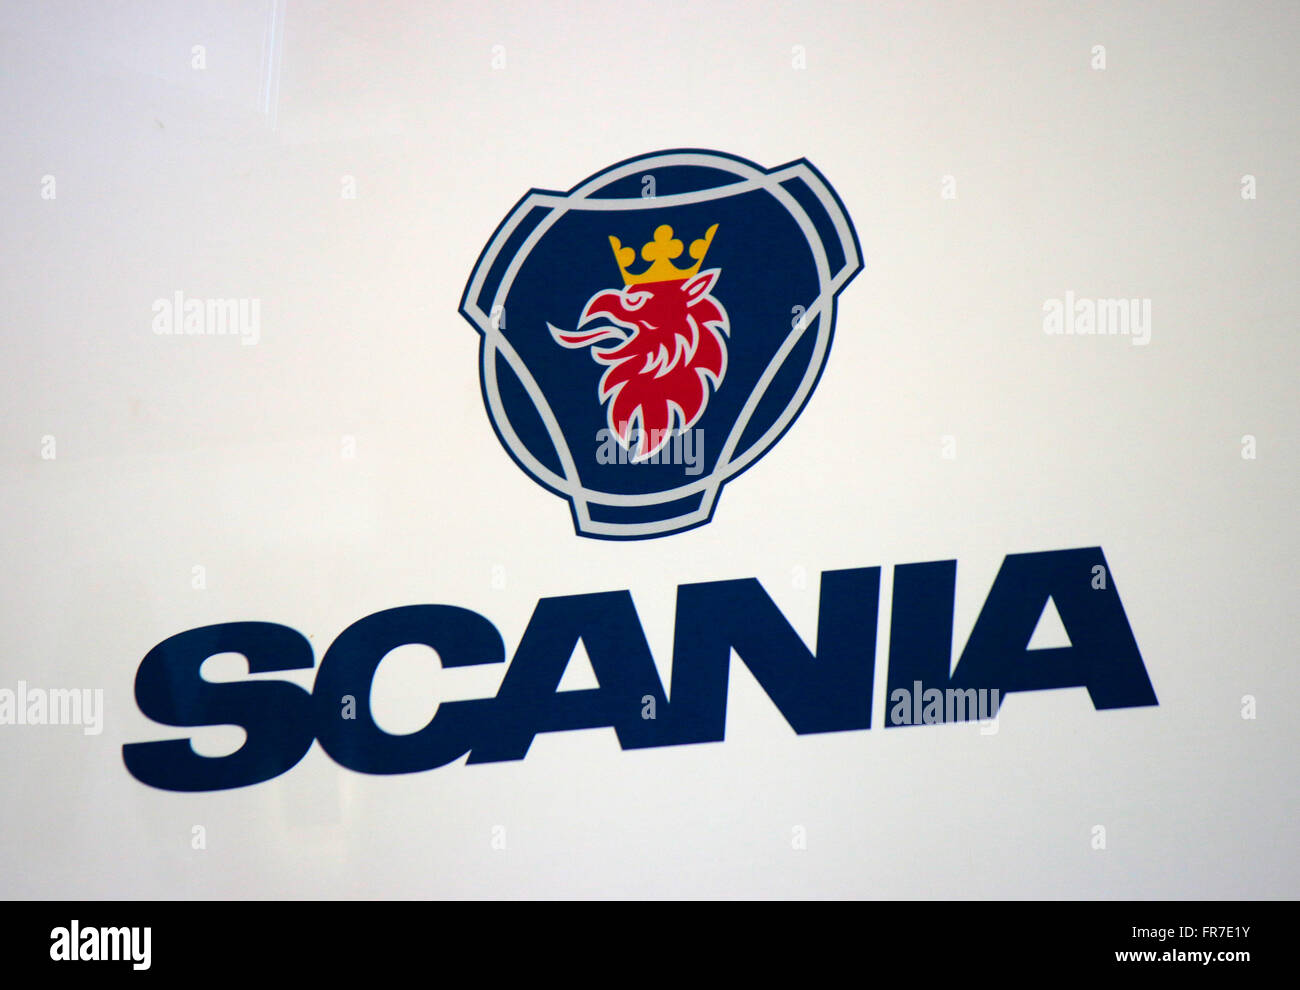 Das Logo der Marke "Scania", Berlin. Stockfoto